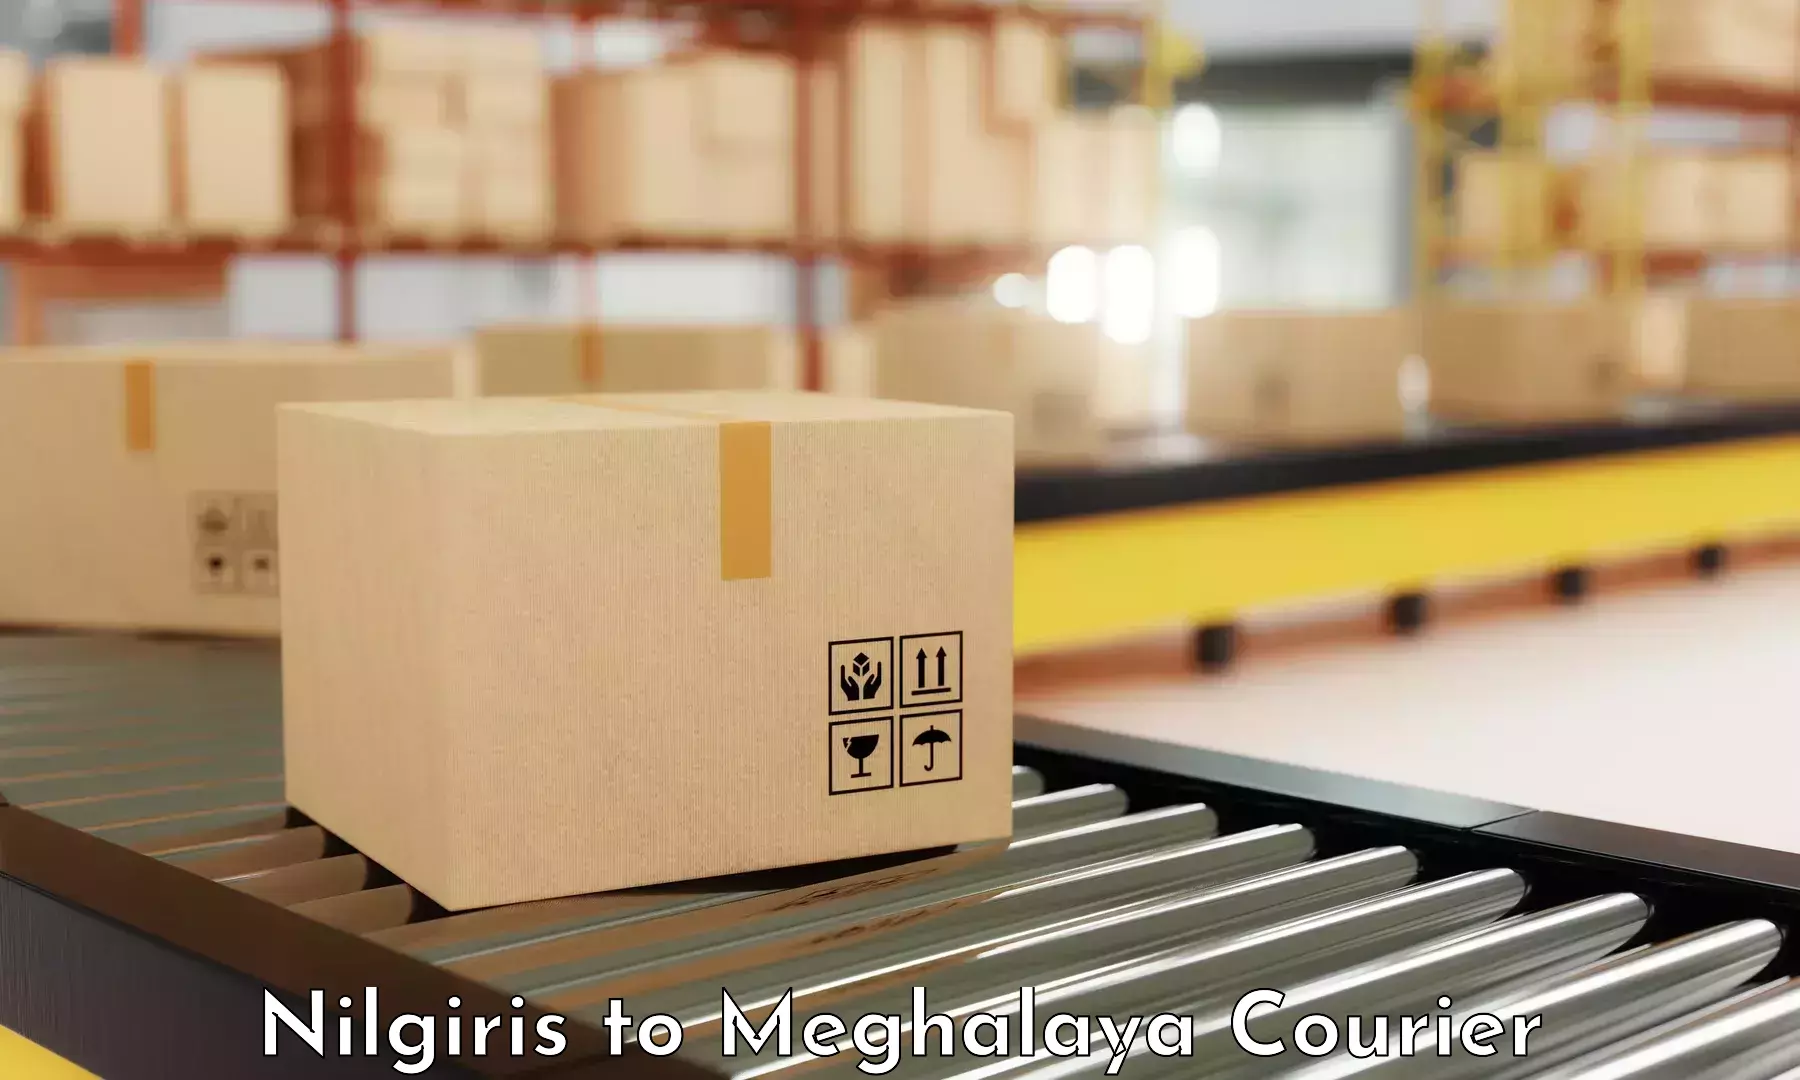 Global logistics network Nilgiris to Meghalaya